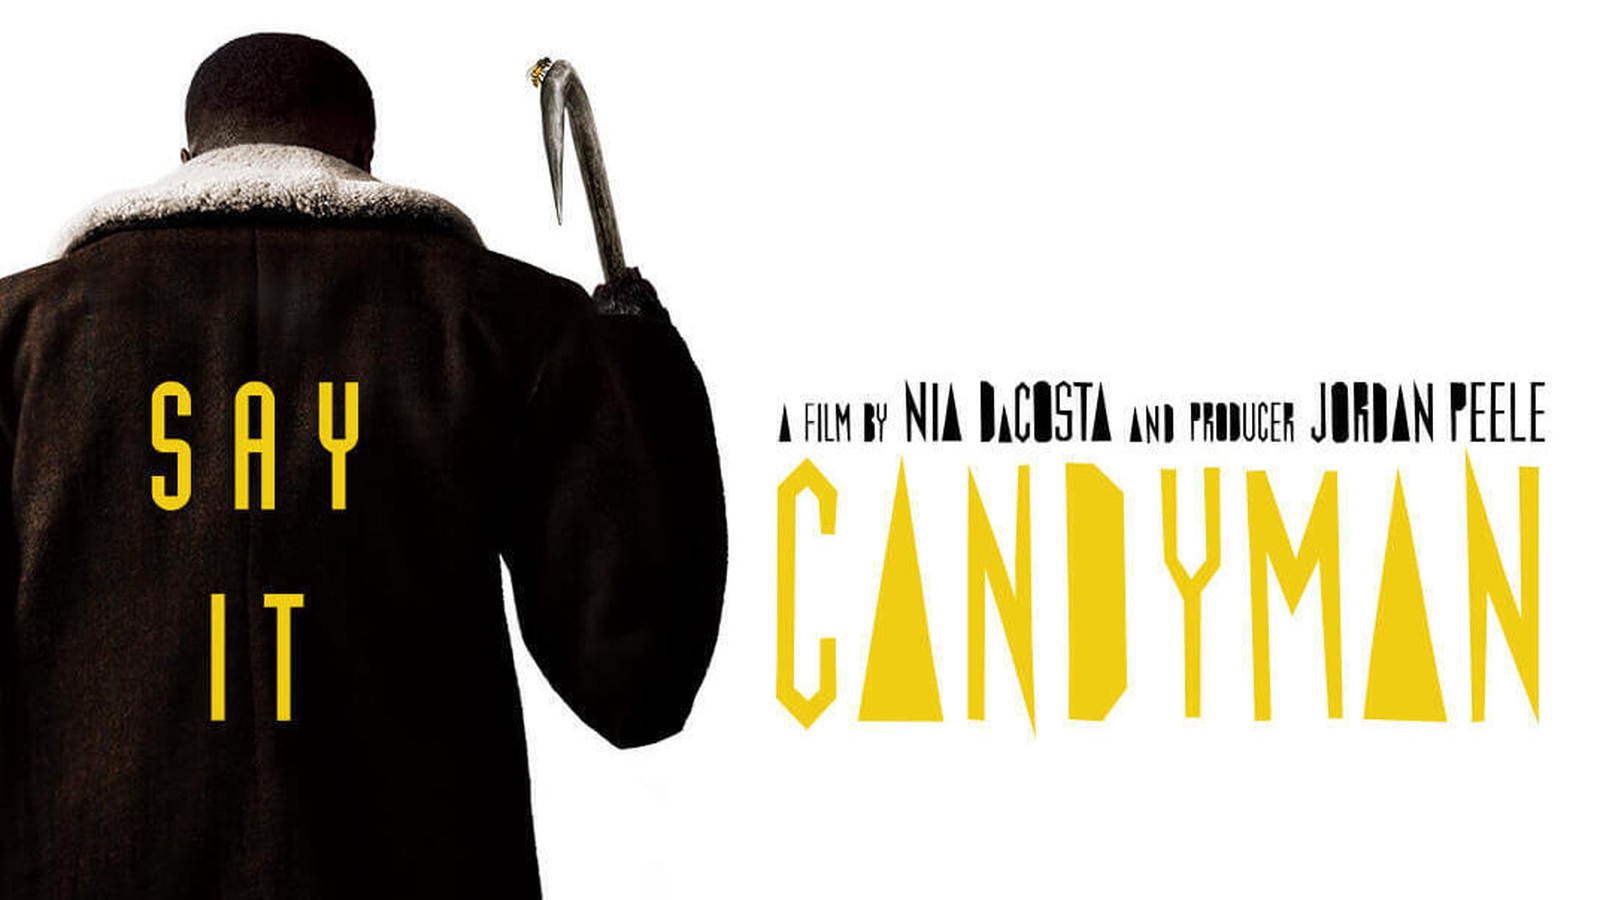 Candyman Movie Review Candyman Slasher Classic Sequel Is Blade-y Good Fun